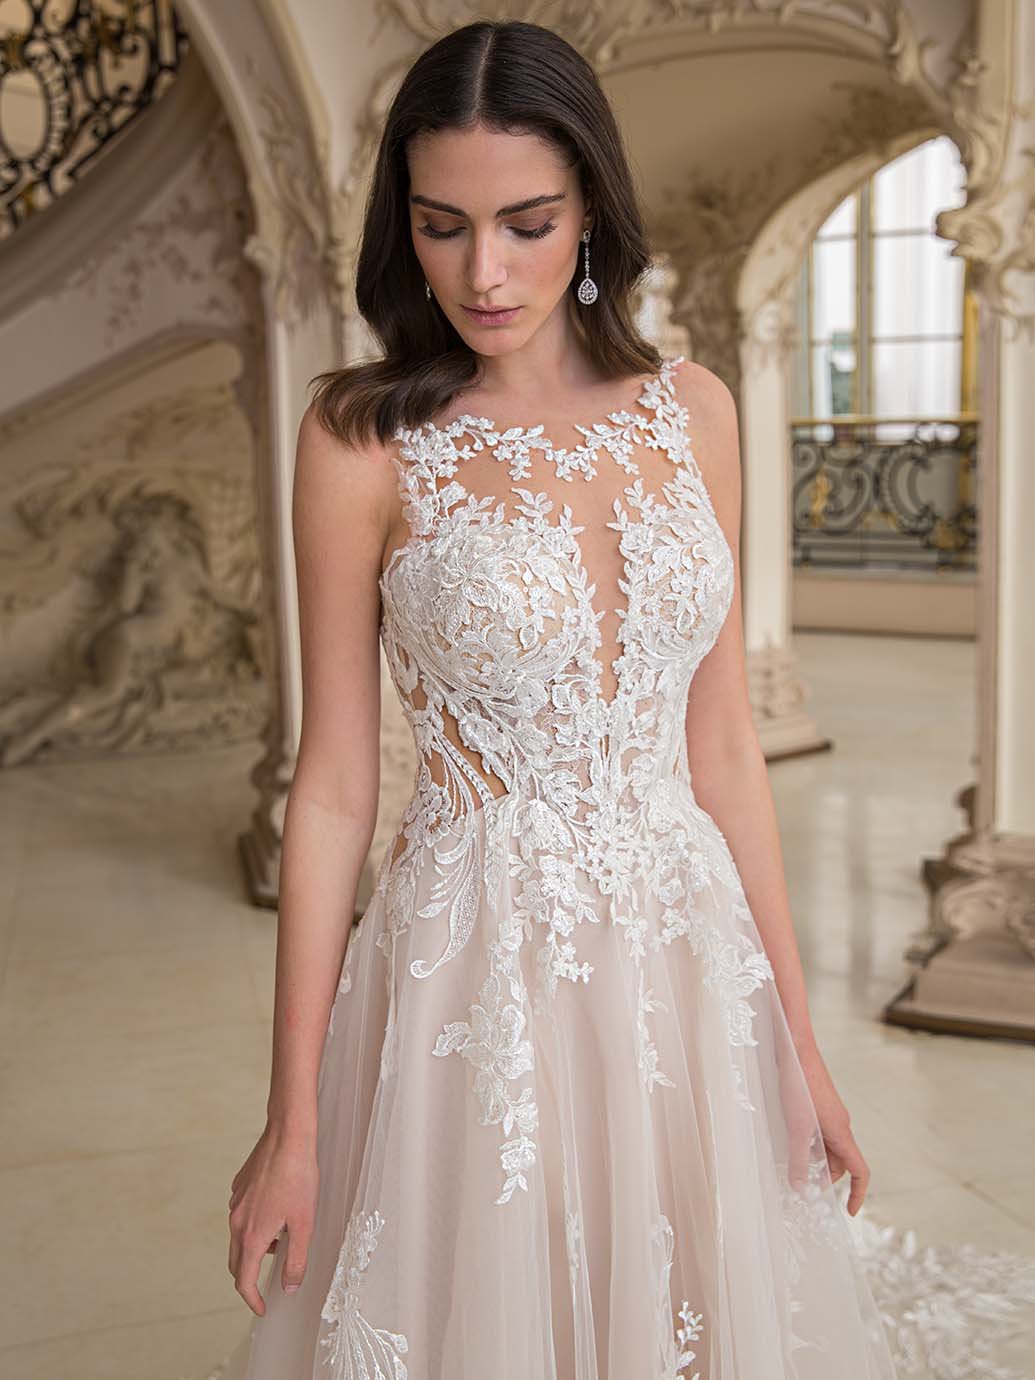 blanc-de-blanc-bridal-boutique-cleveland-dress-wedding-gown-elysee-laurent.jpg